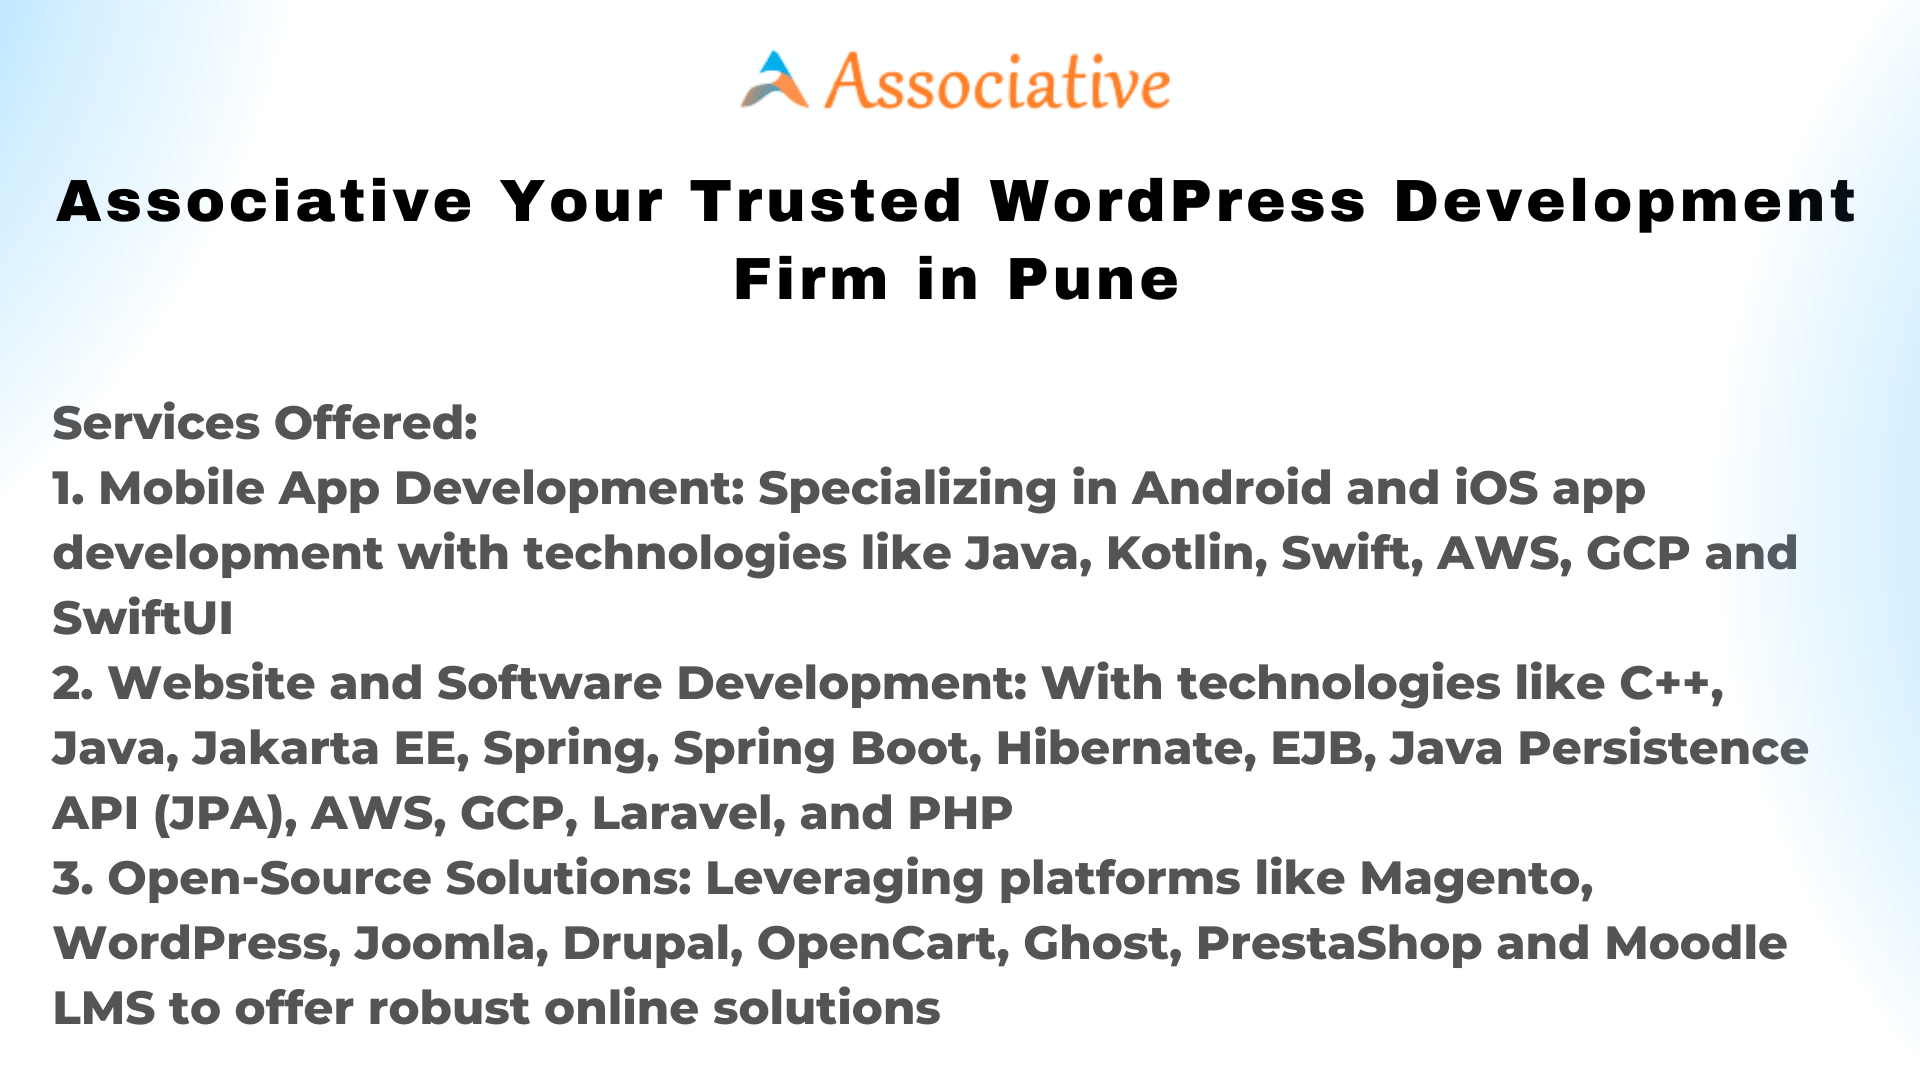 Associative Your Trusted WordPress Development Firm in Pune